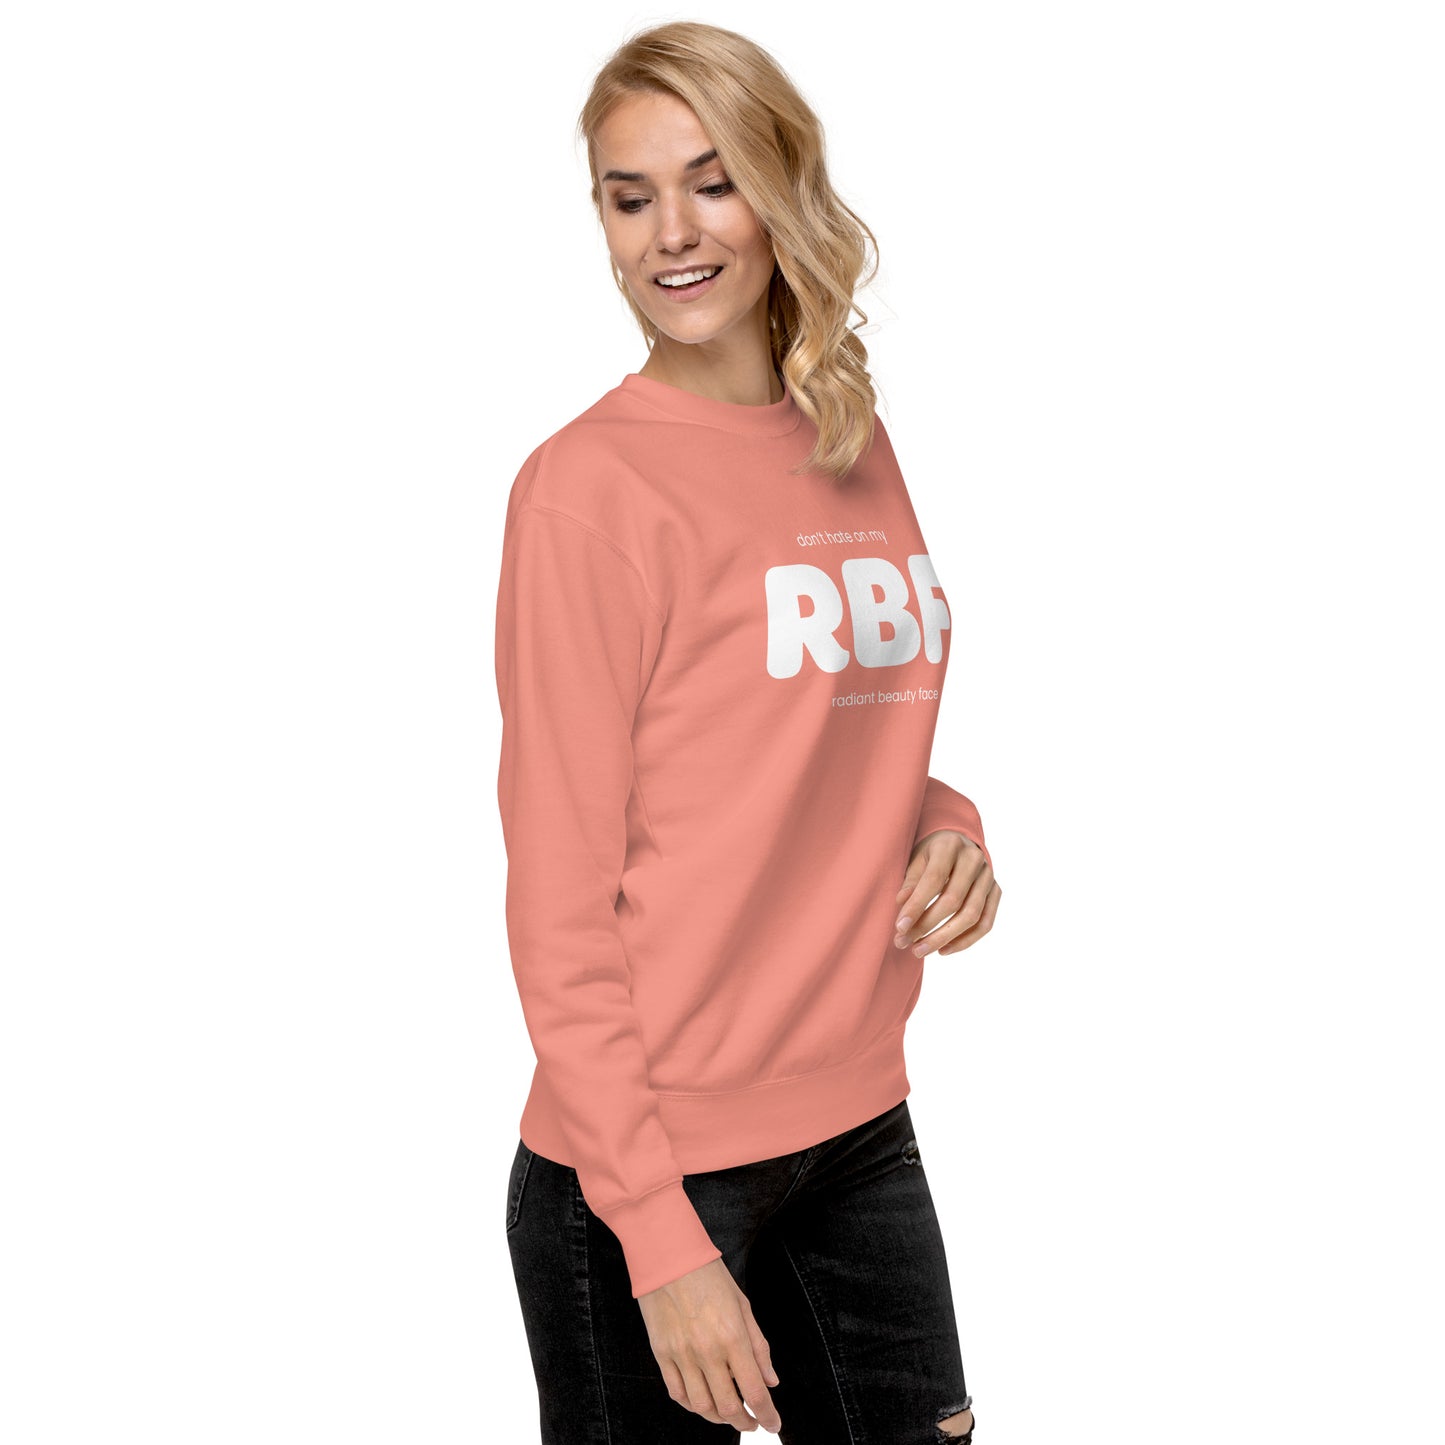 RSN - RBF Sweatshirt